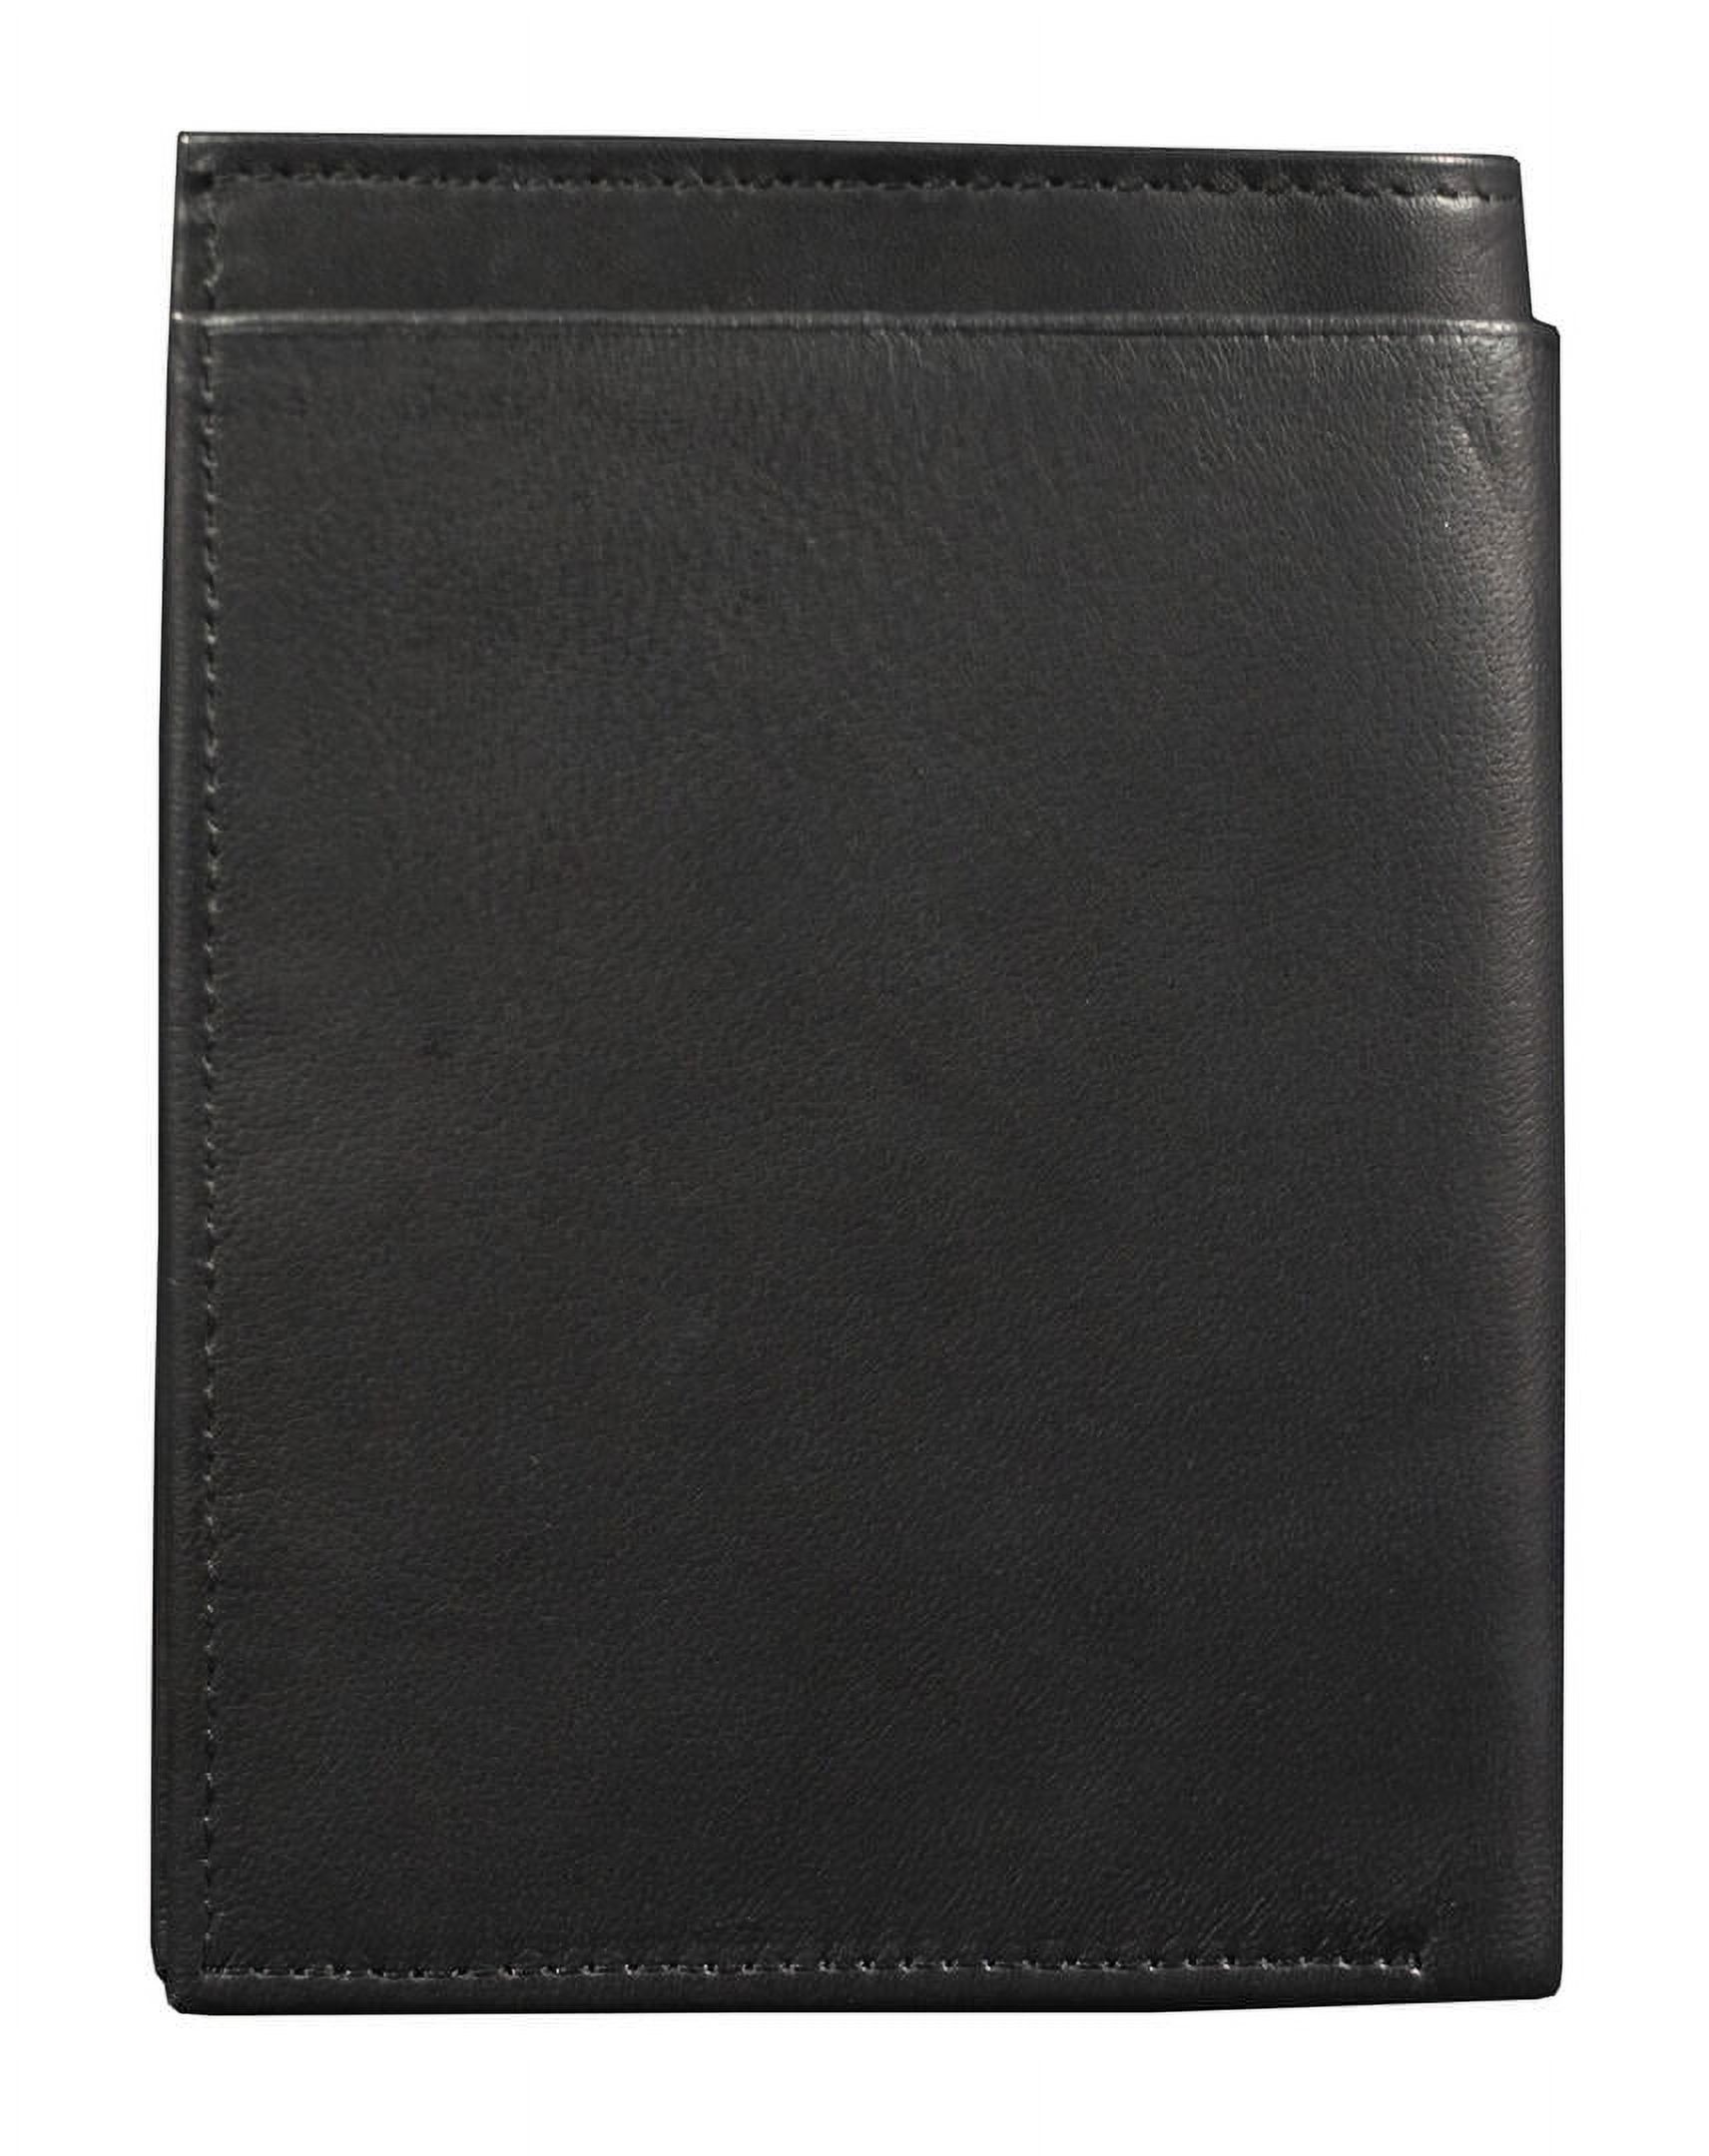 Utah NCAA Utes Black Leather Traveling Bilfold Wallet w/ RFID Blocking- 14 total slots/pockets - image 4 of 6